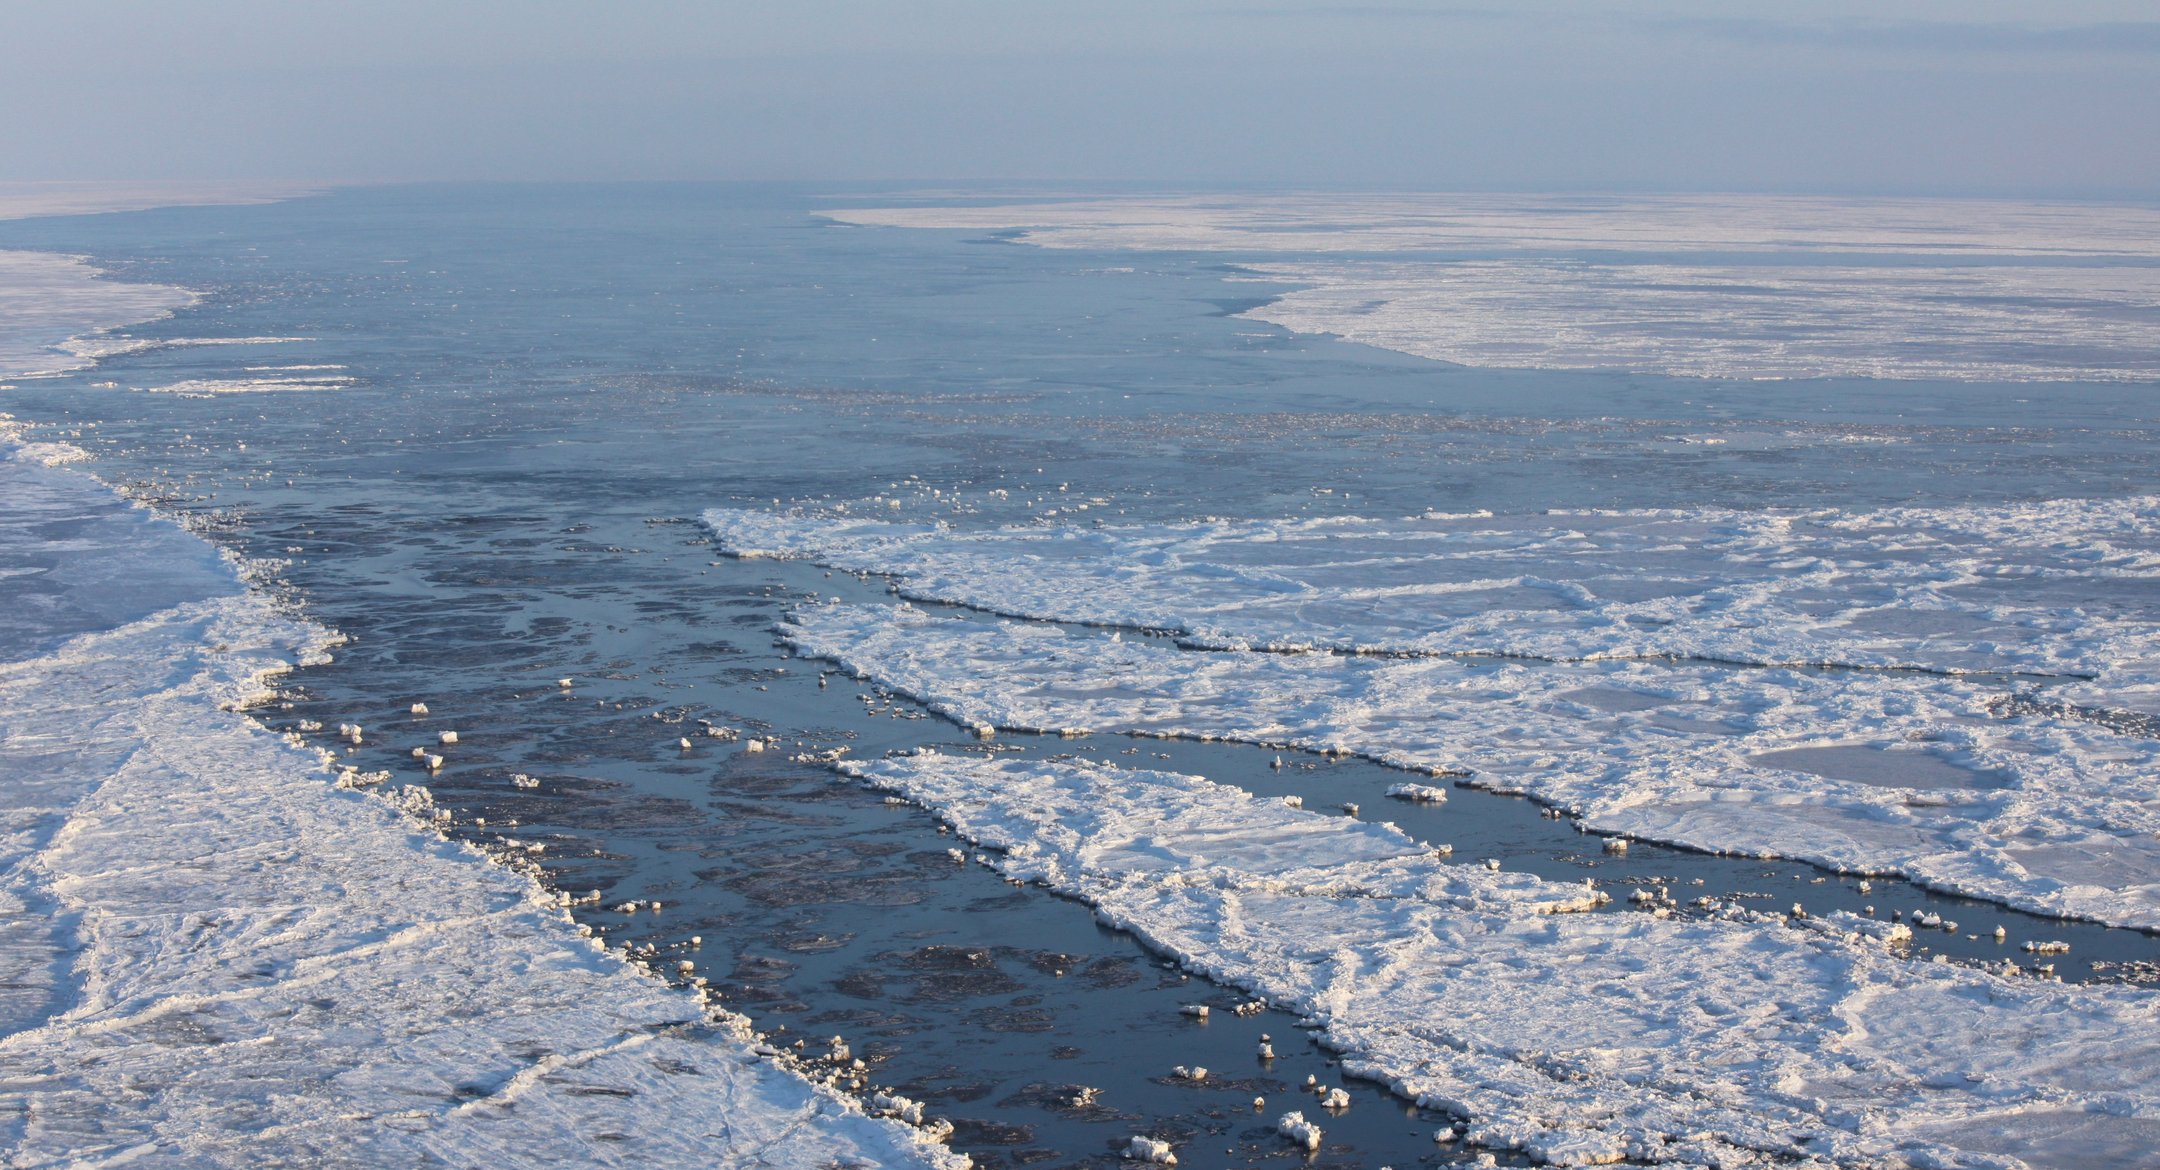 The icy Barents sea. Credit: Vladimir Lugai/Shutterstock.com